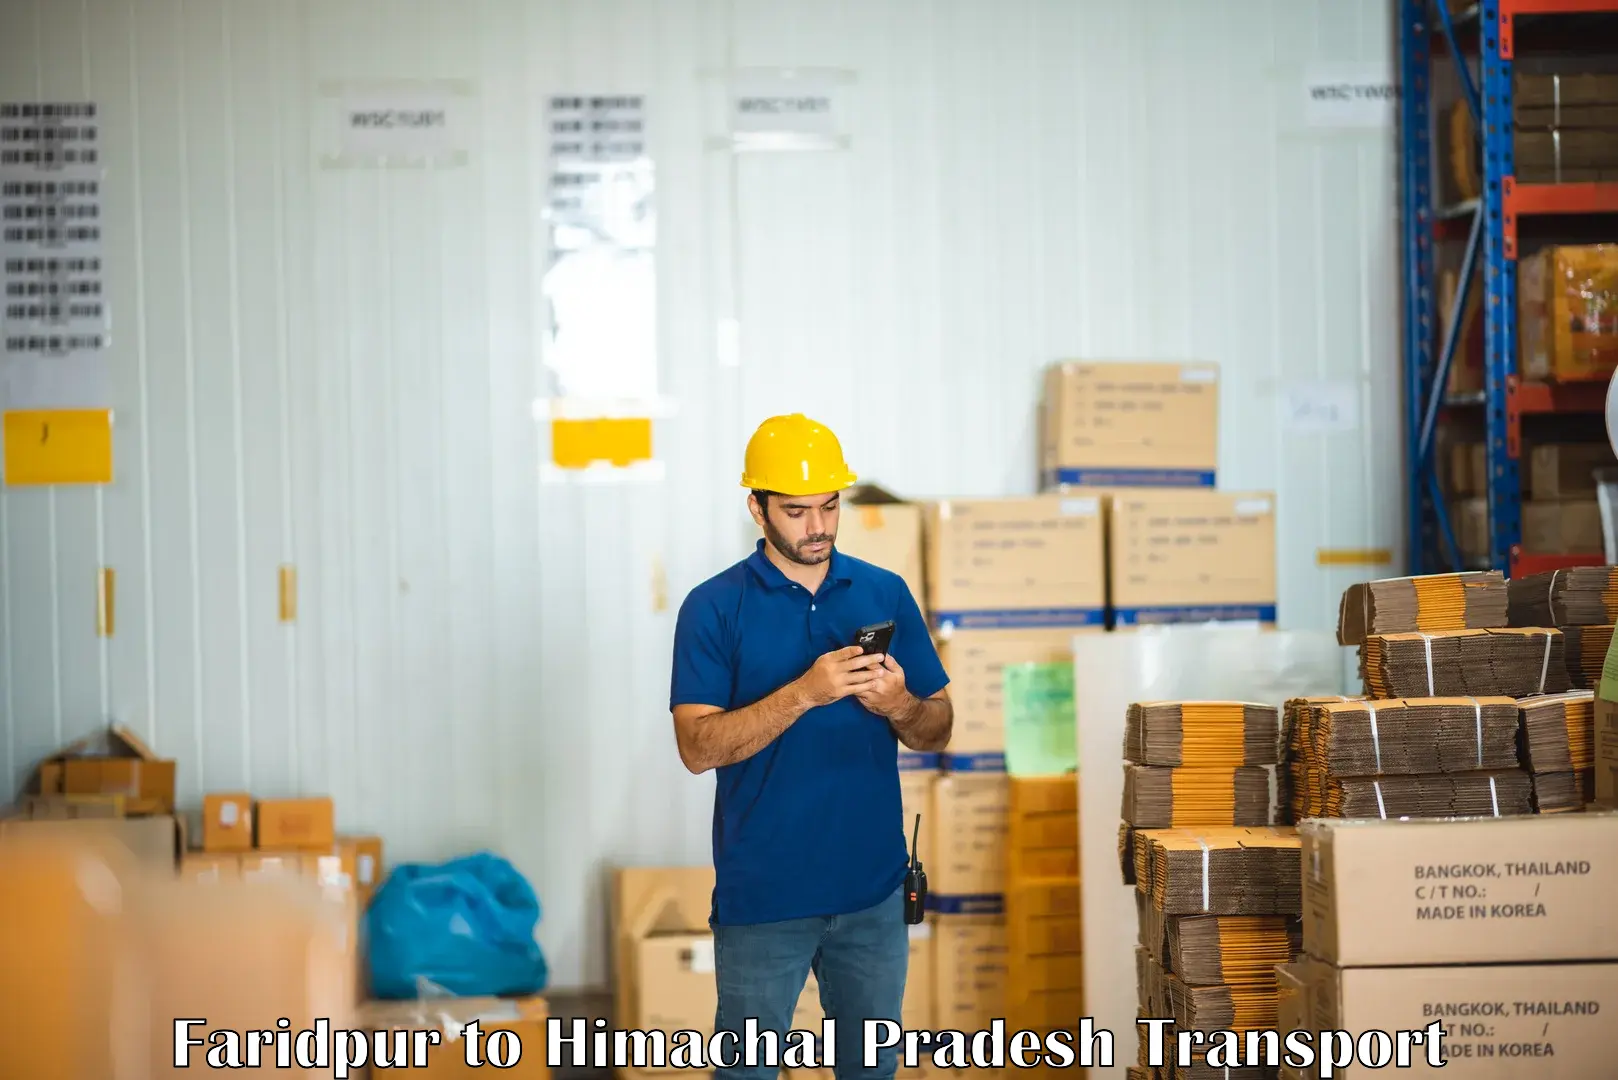 Shipping partner Faridpur to Himachal Pradesh